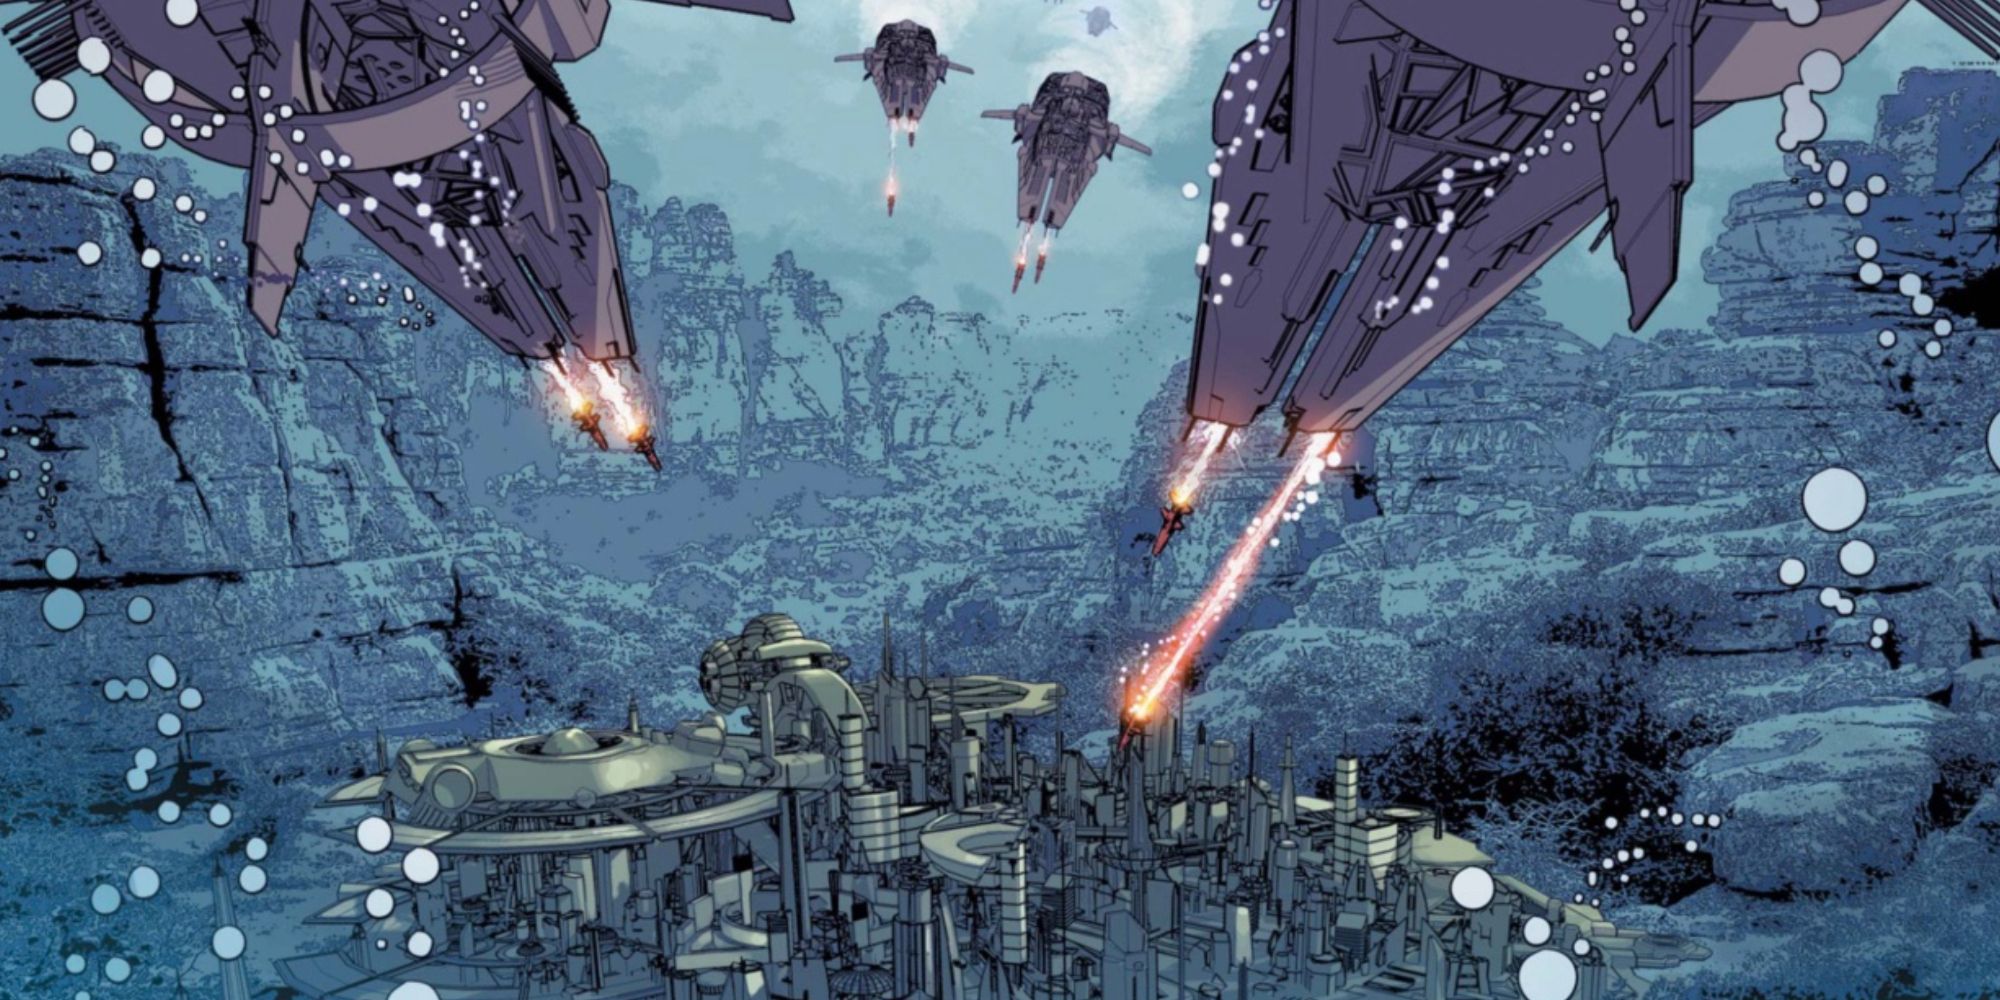 Wakanda attacks Atlantis in Marvel Comics.